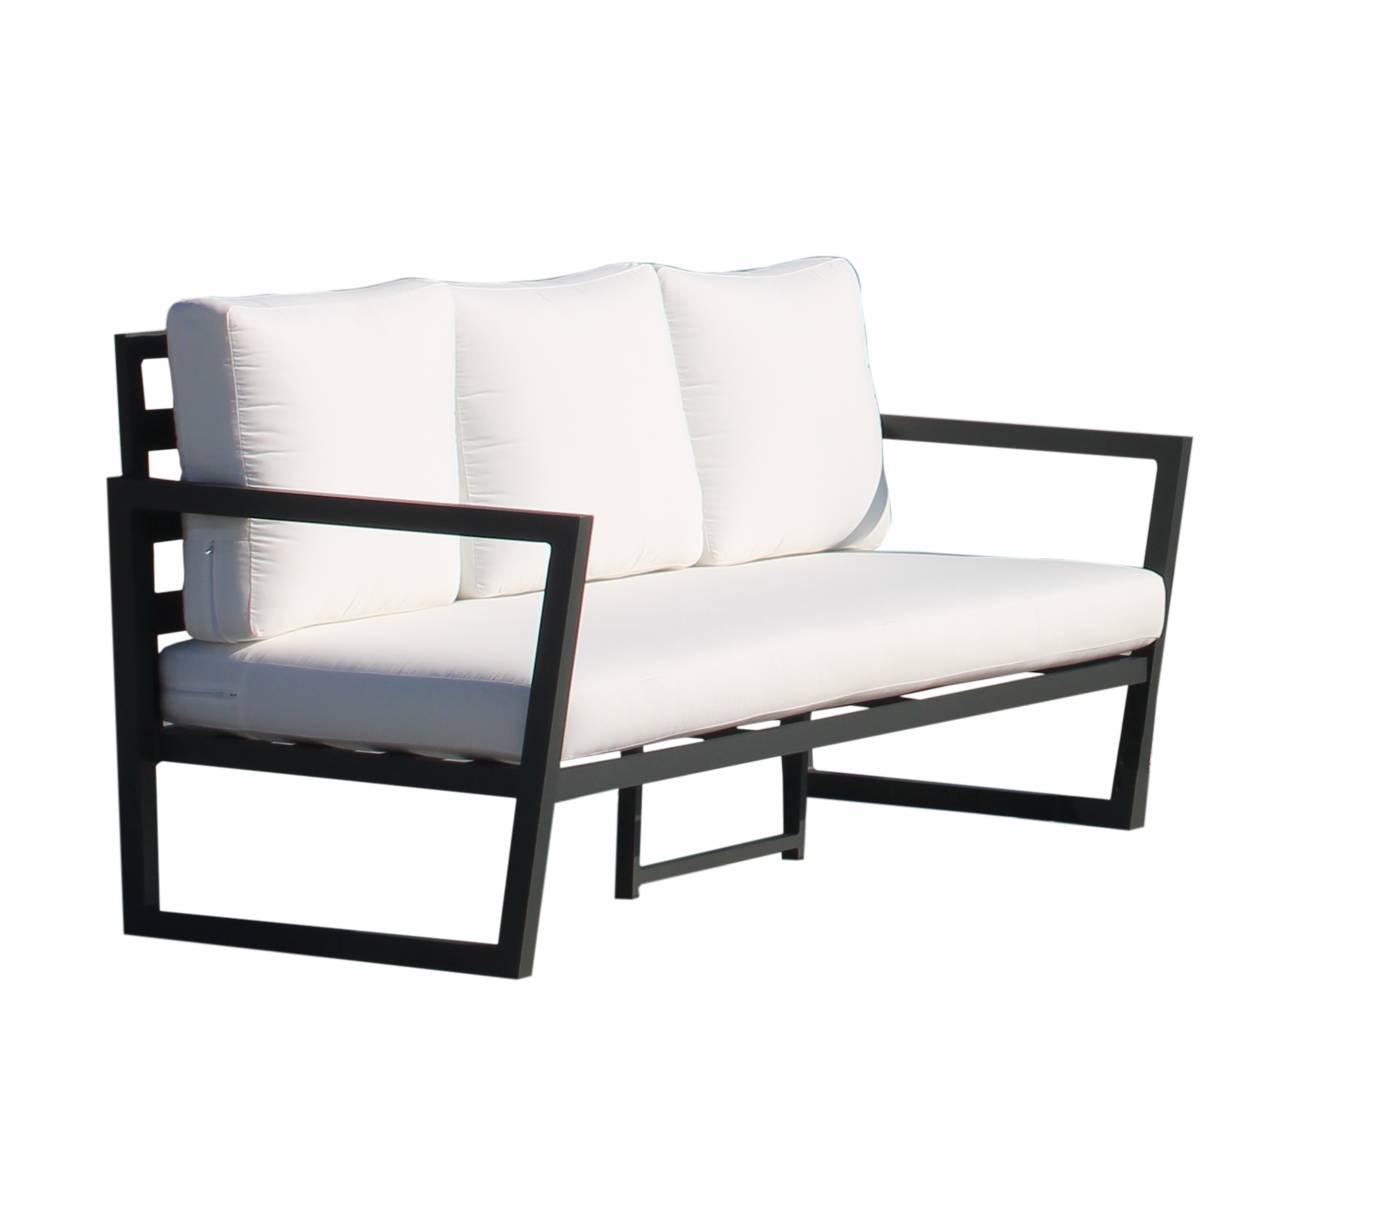 Set Aluminio Alpine-8 - Conjunto de aluminio para exterior: sofá 3 plazas + 2 sillones + mesa de centro. Disponible en color blanco, antracita, champagne, plata o marrón.